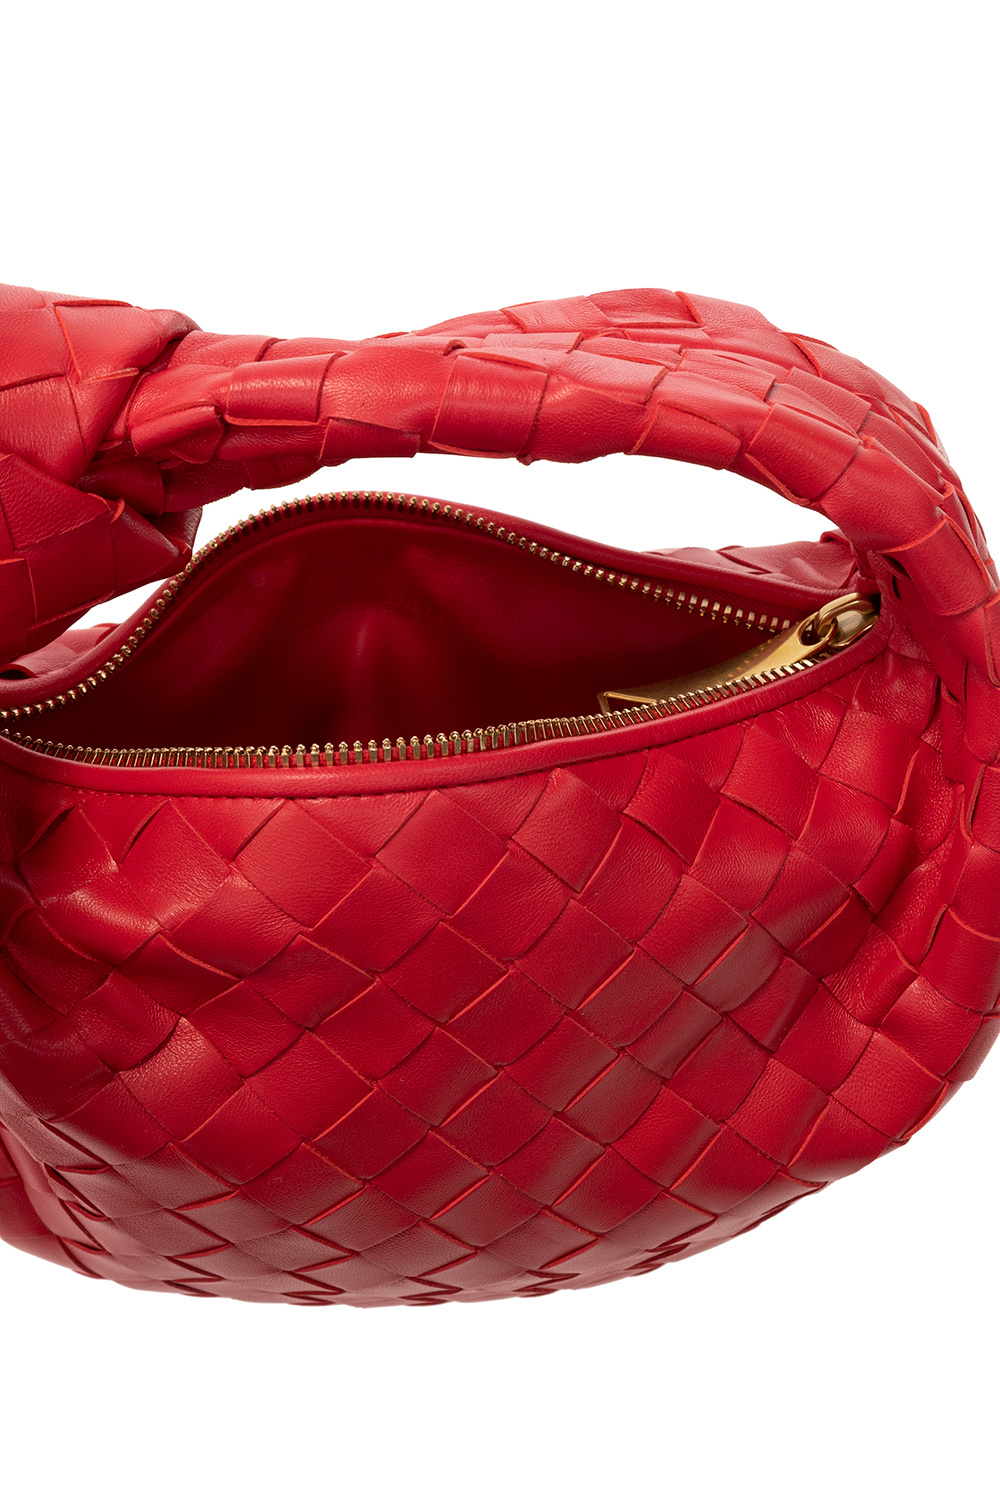 Bottega Veneta Women's Mini Jodie Leather Hobo Bag